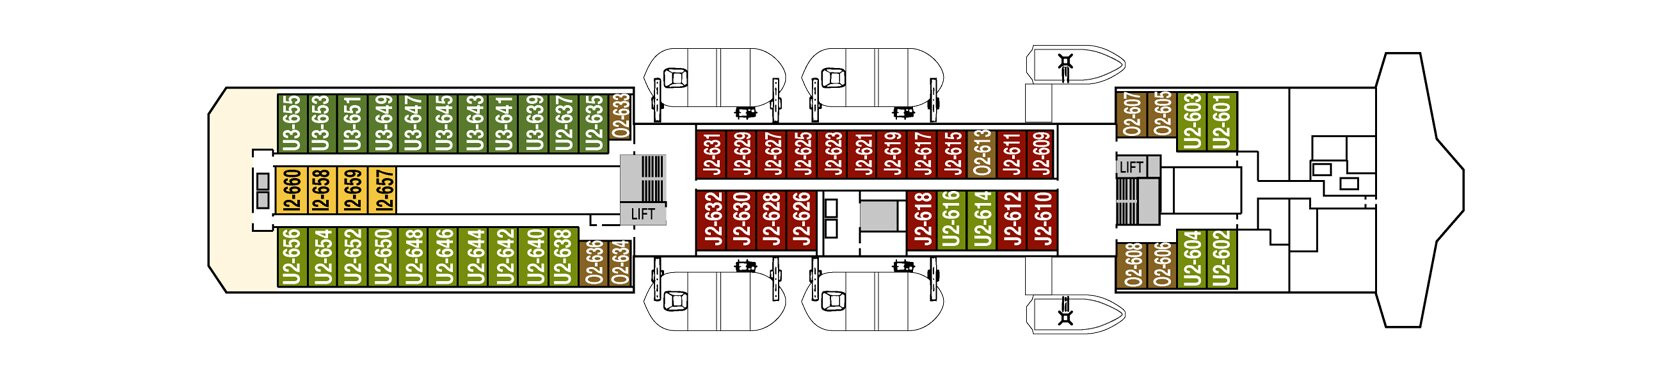 1548636372.4818_d269_Hurtigruten MS Kong Harald Deck Plans Deck 6.png